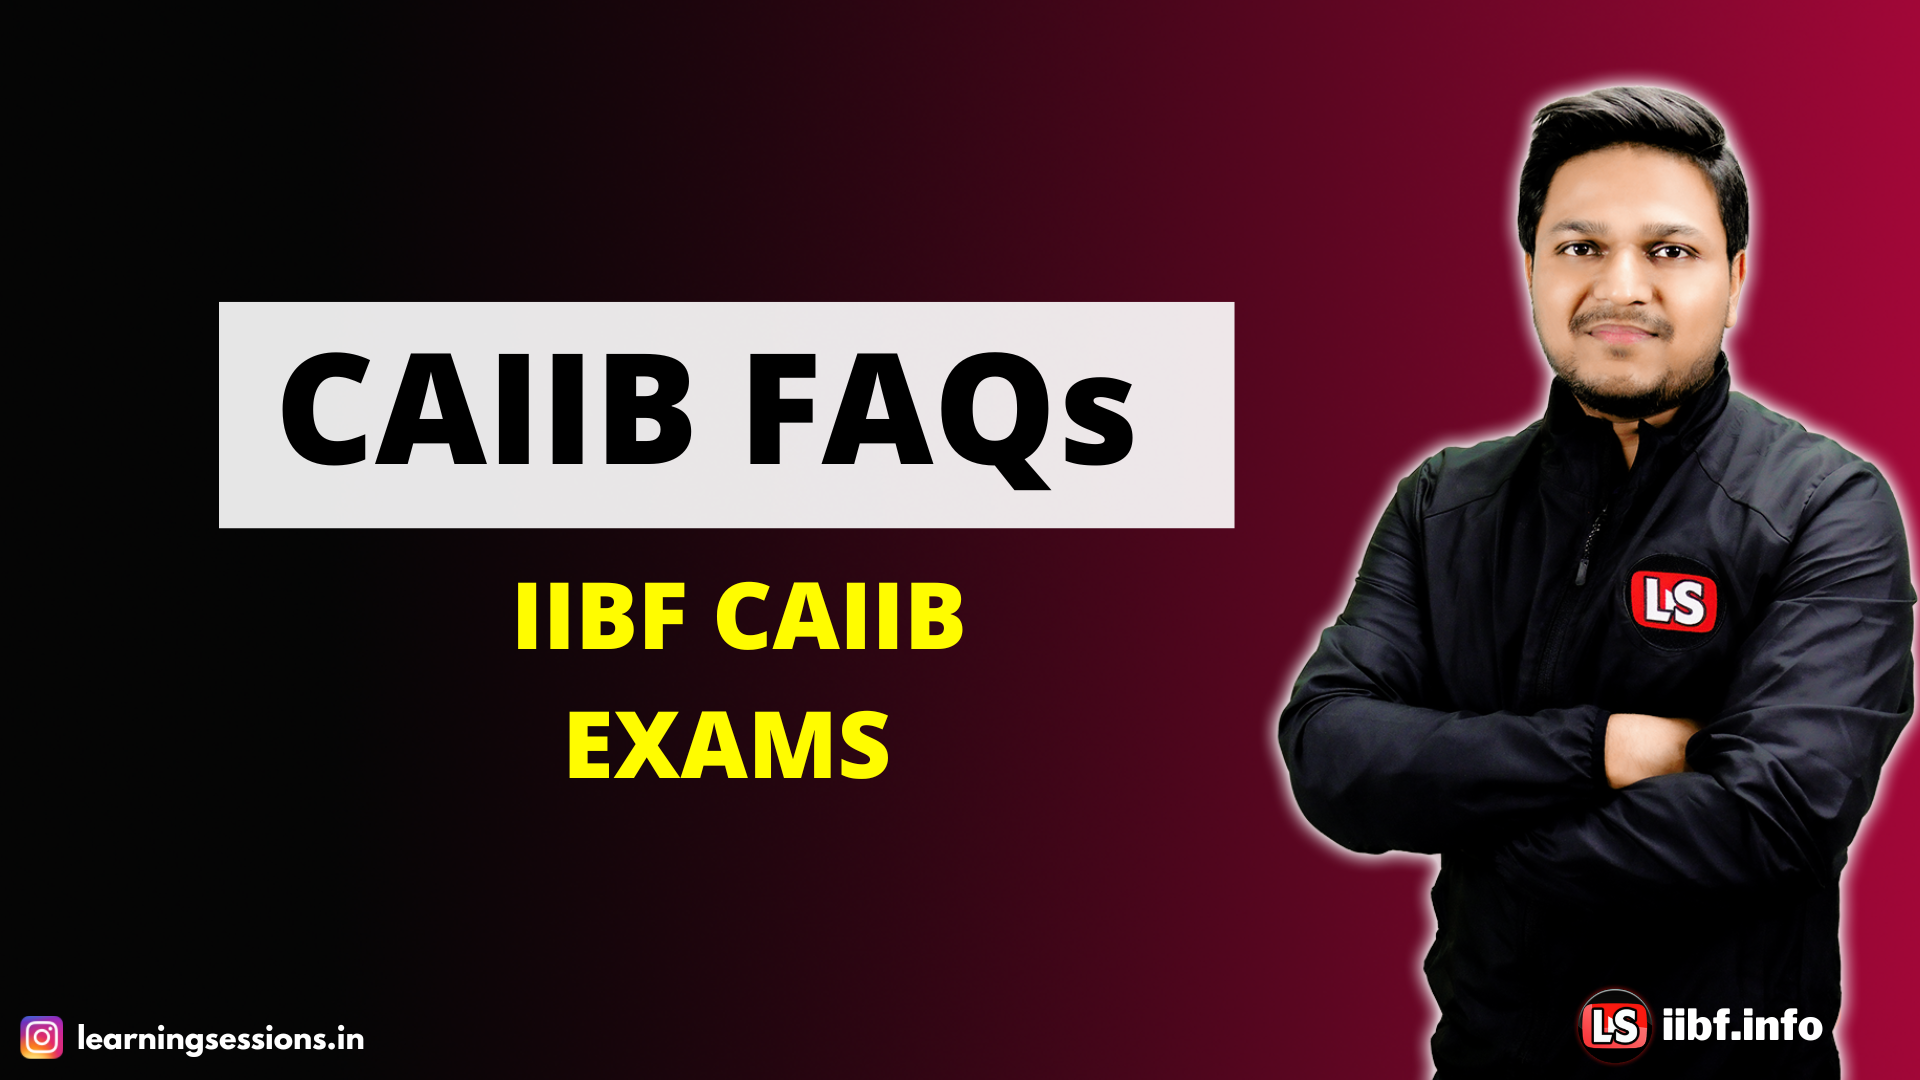 CAIIB FAQs | WHY CHOOSE CAIIB? | CAIIB EXAMS